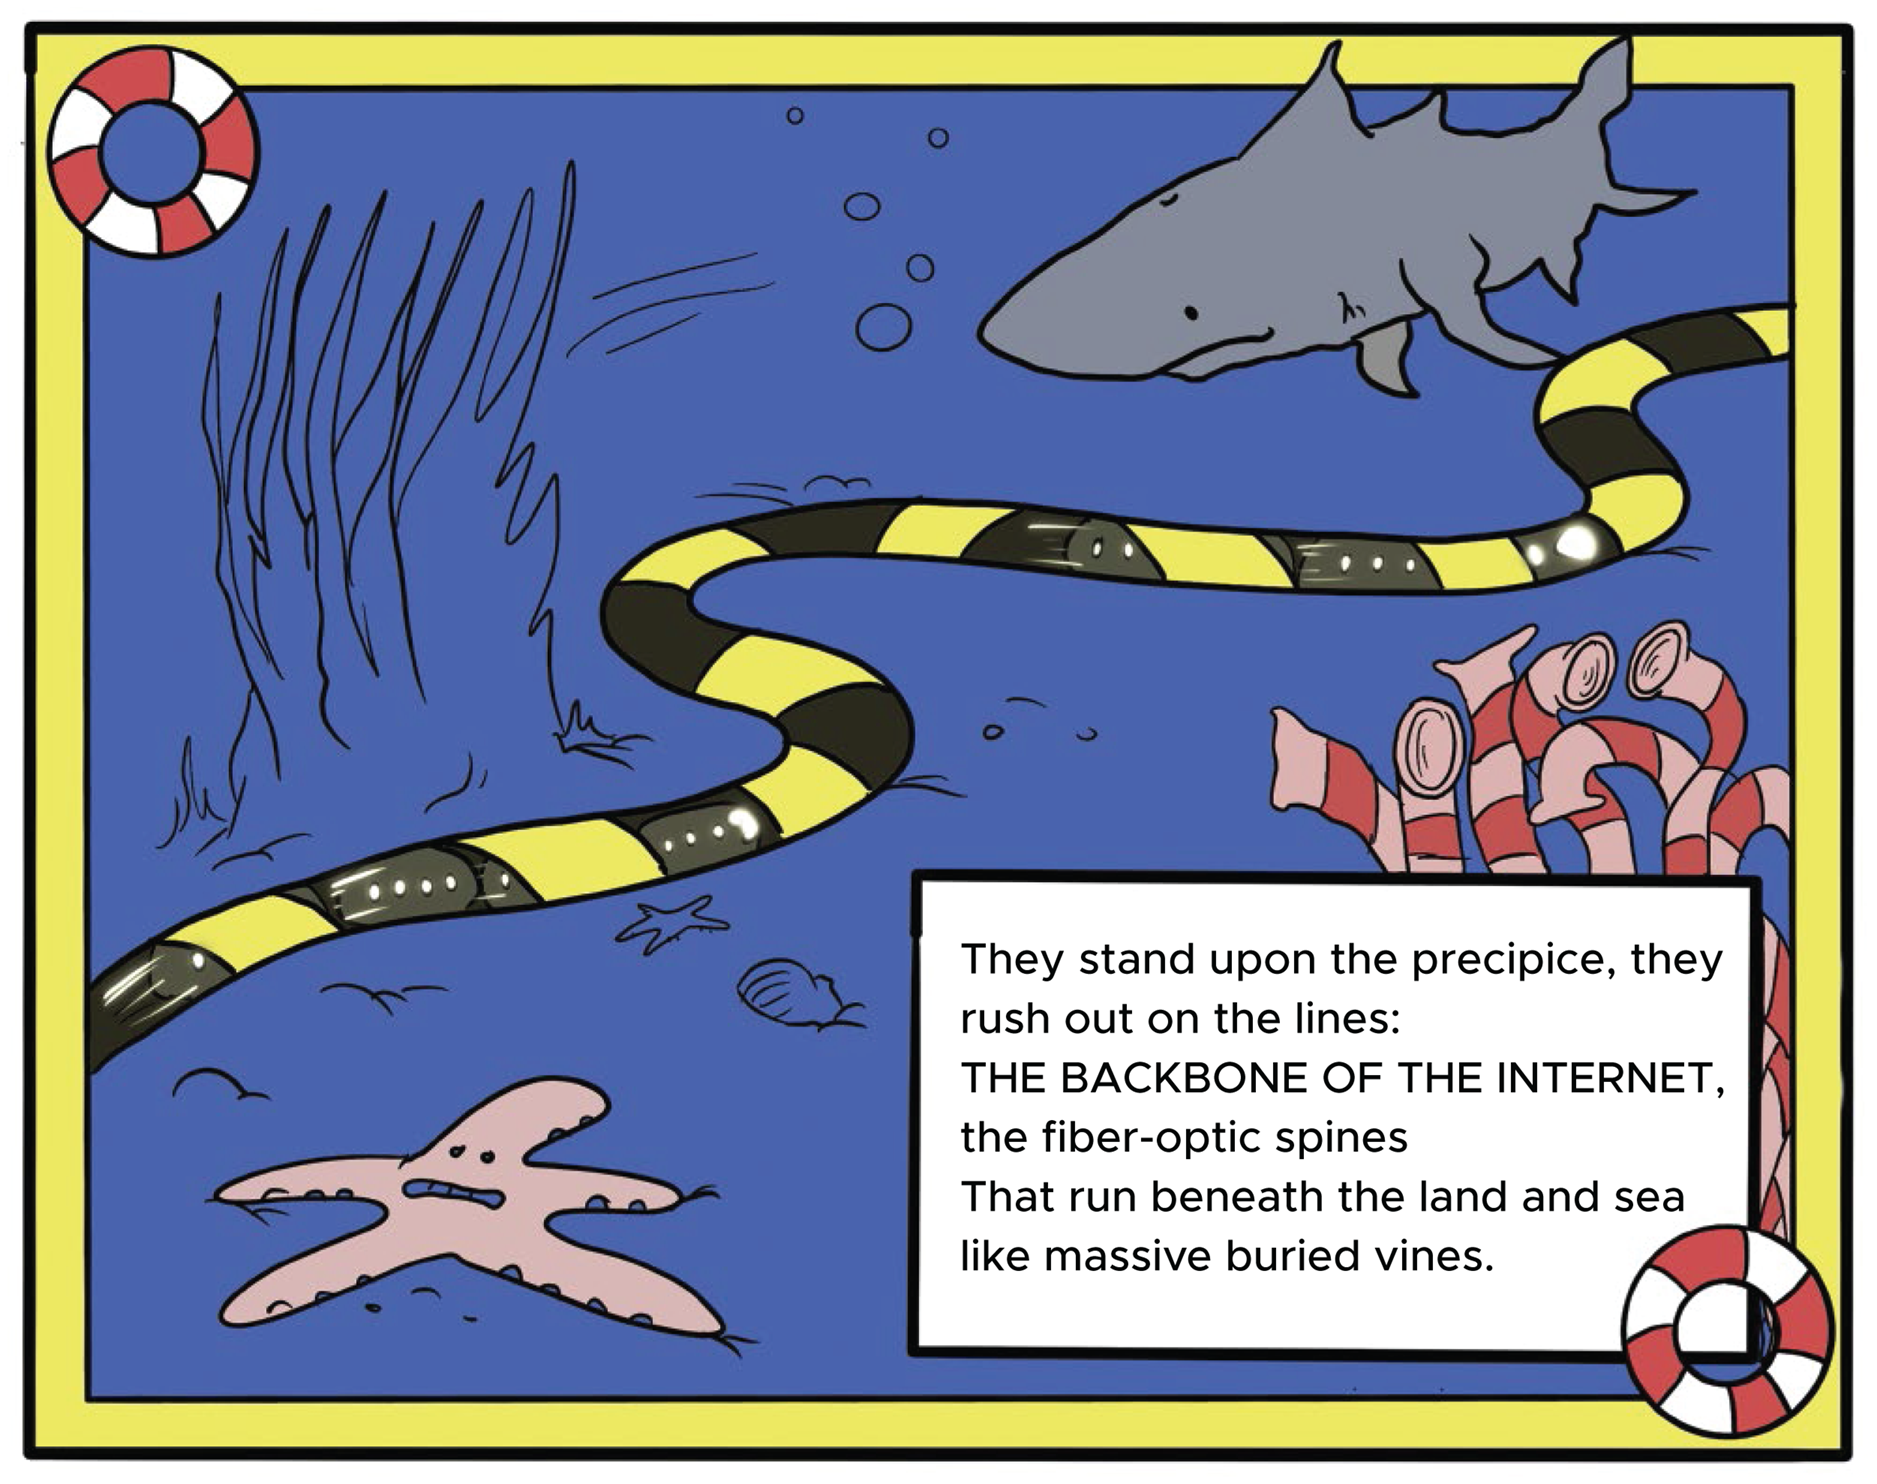 Cartoon illustration of the backbone of the internet that run beneath the sea.